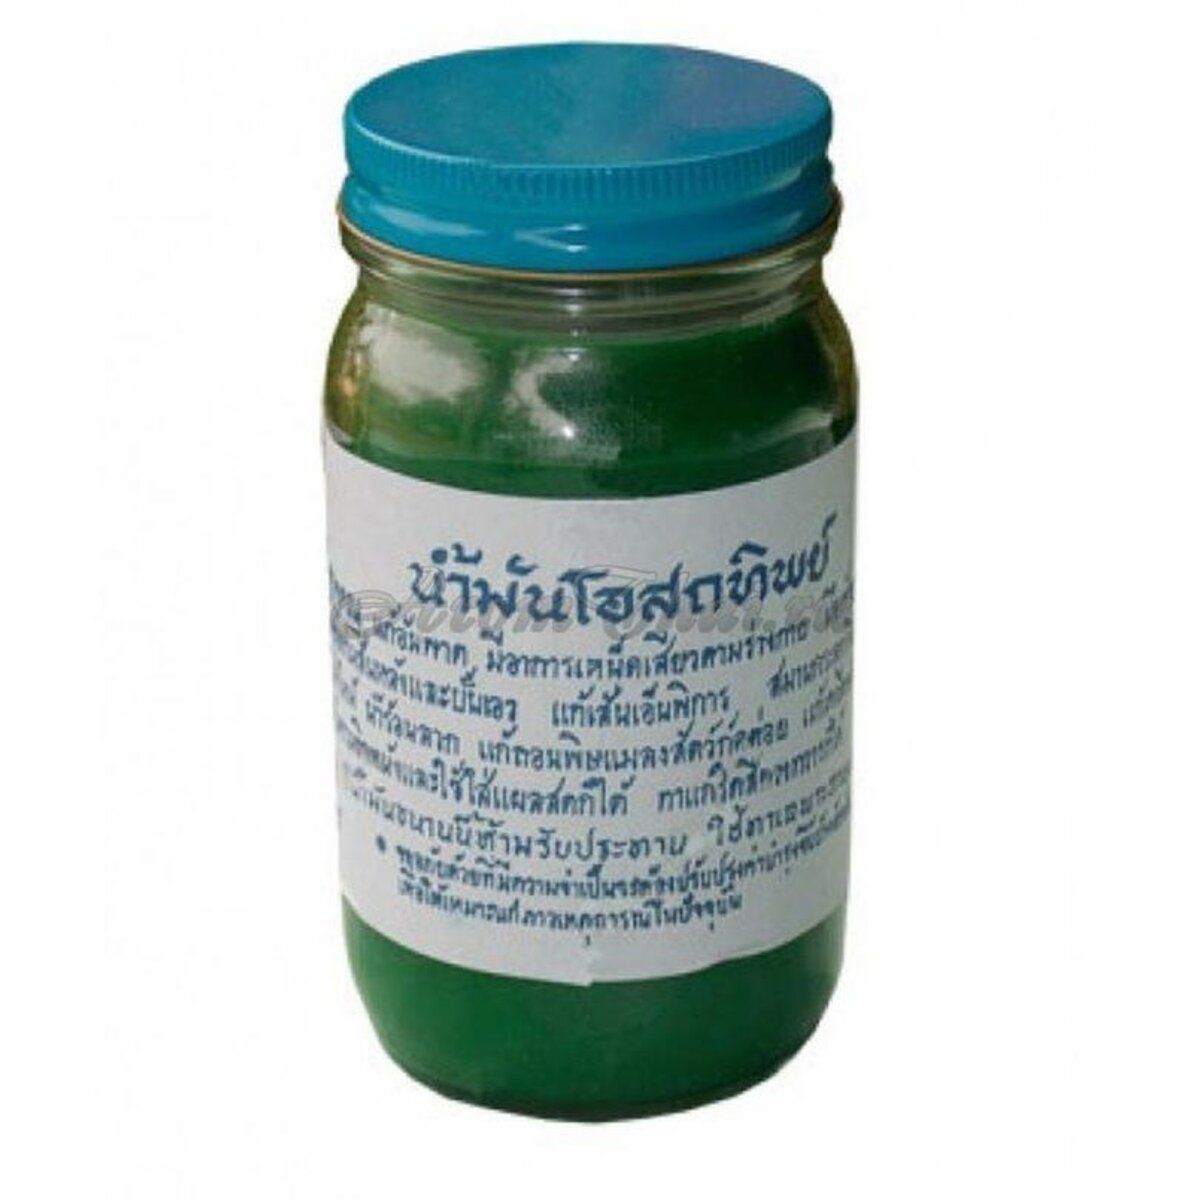 зеленый бальзам из тайланда